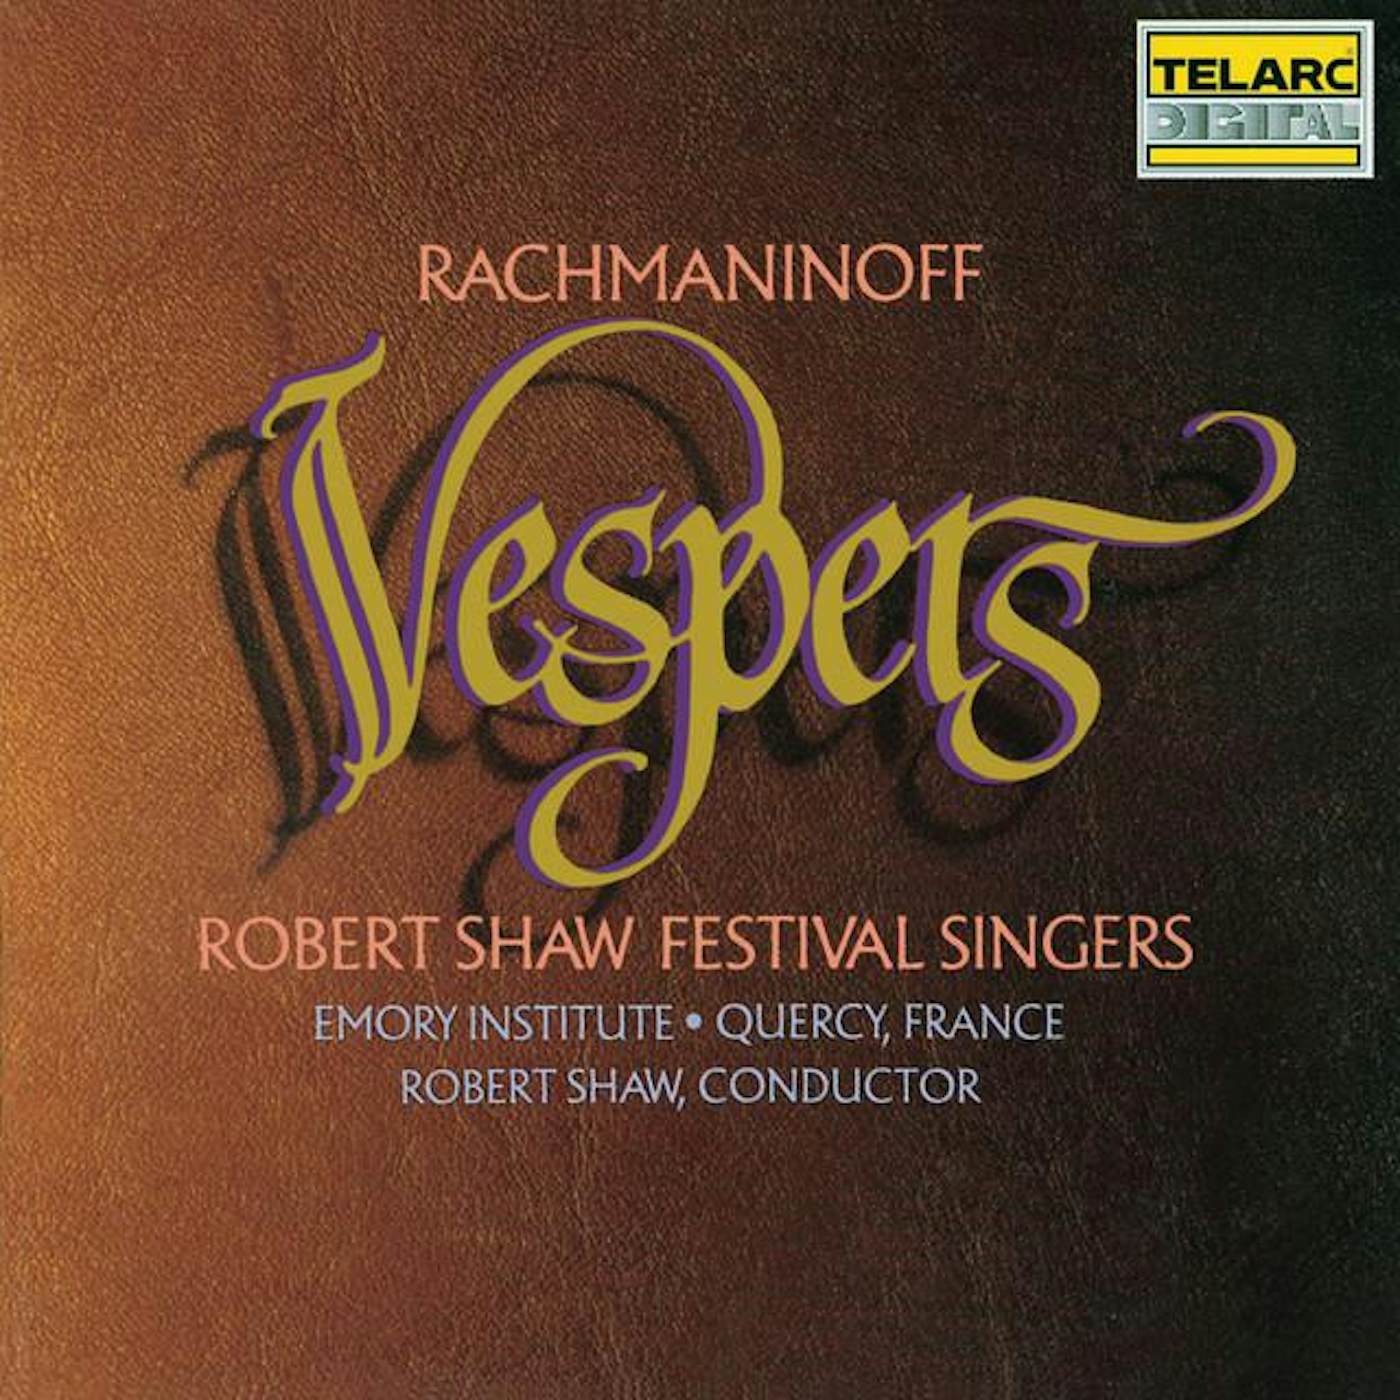 Robert Shaw Festival Singers